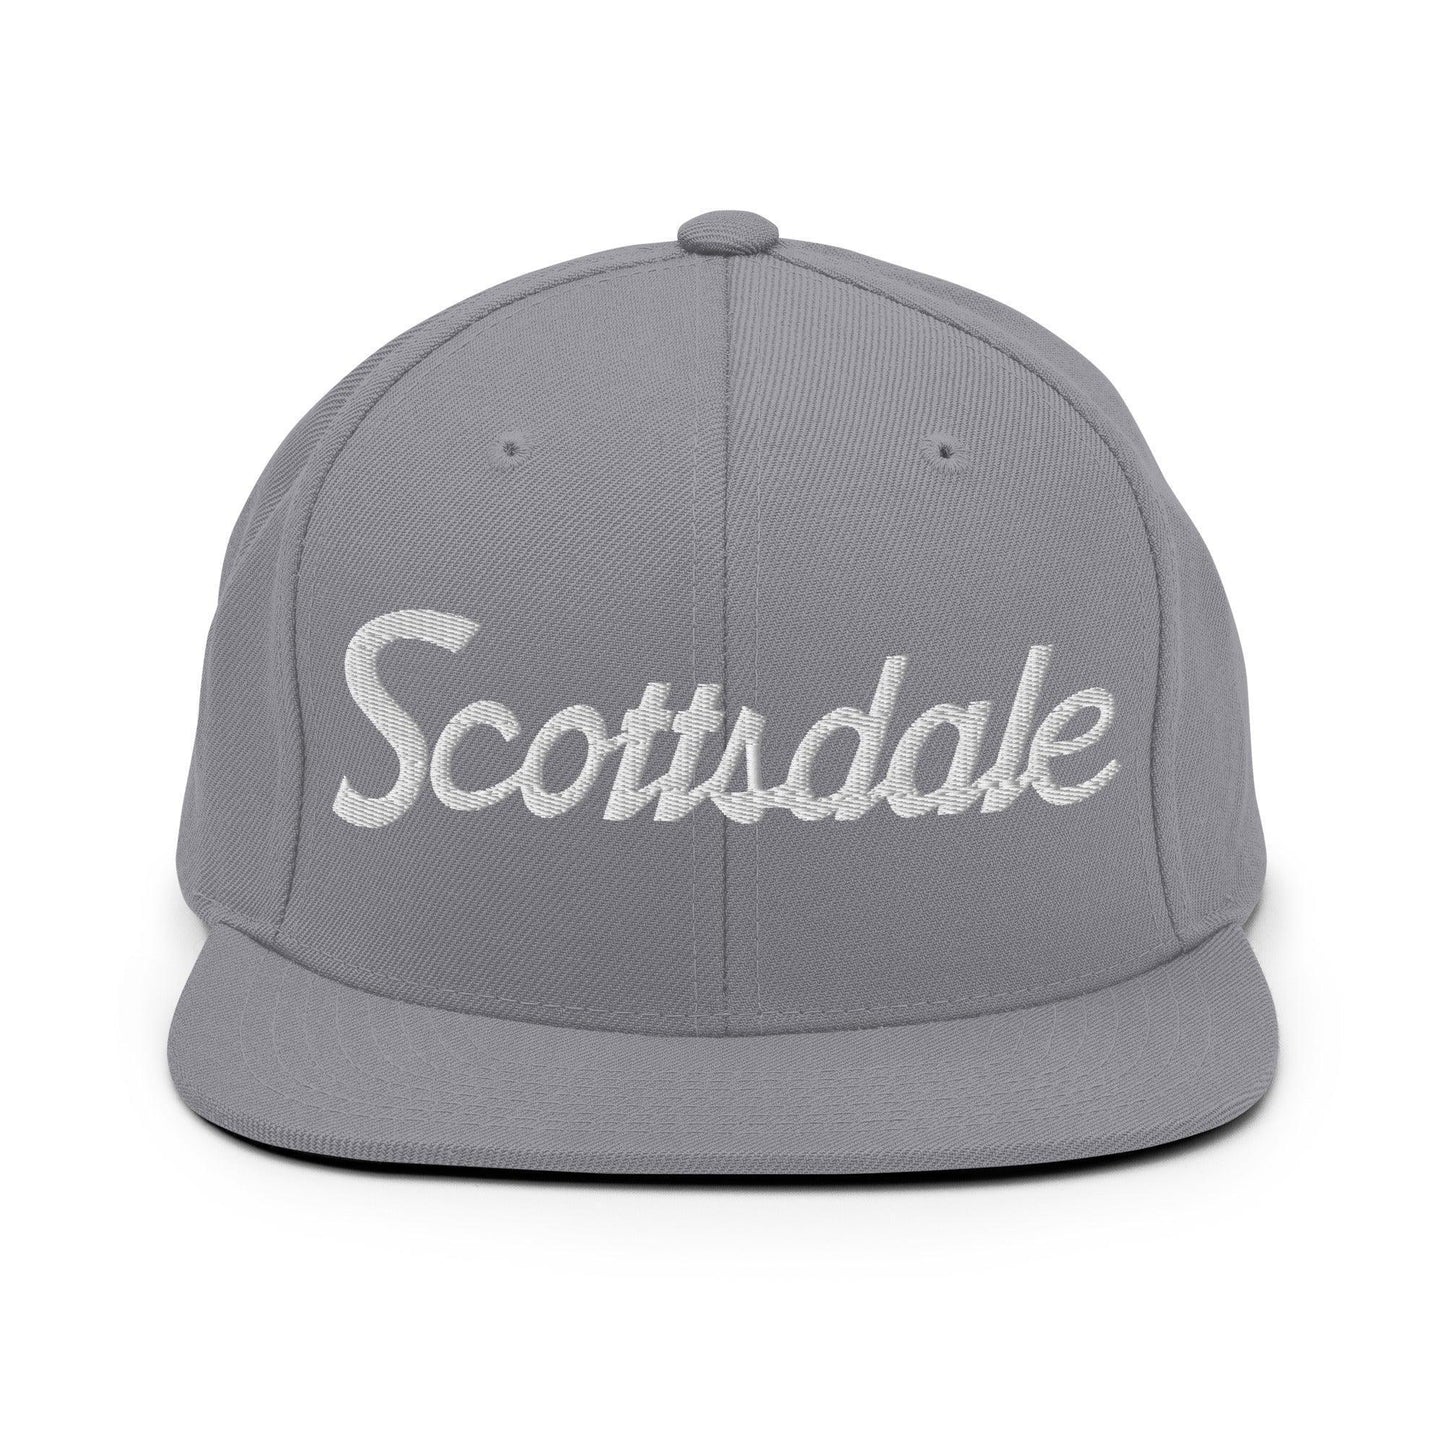 Scottsdale Script Snapback Hat Silver